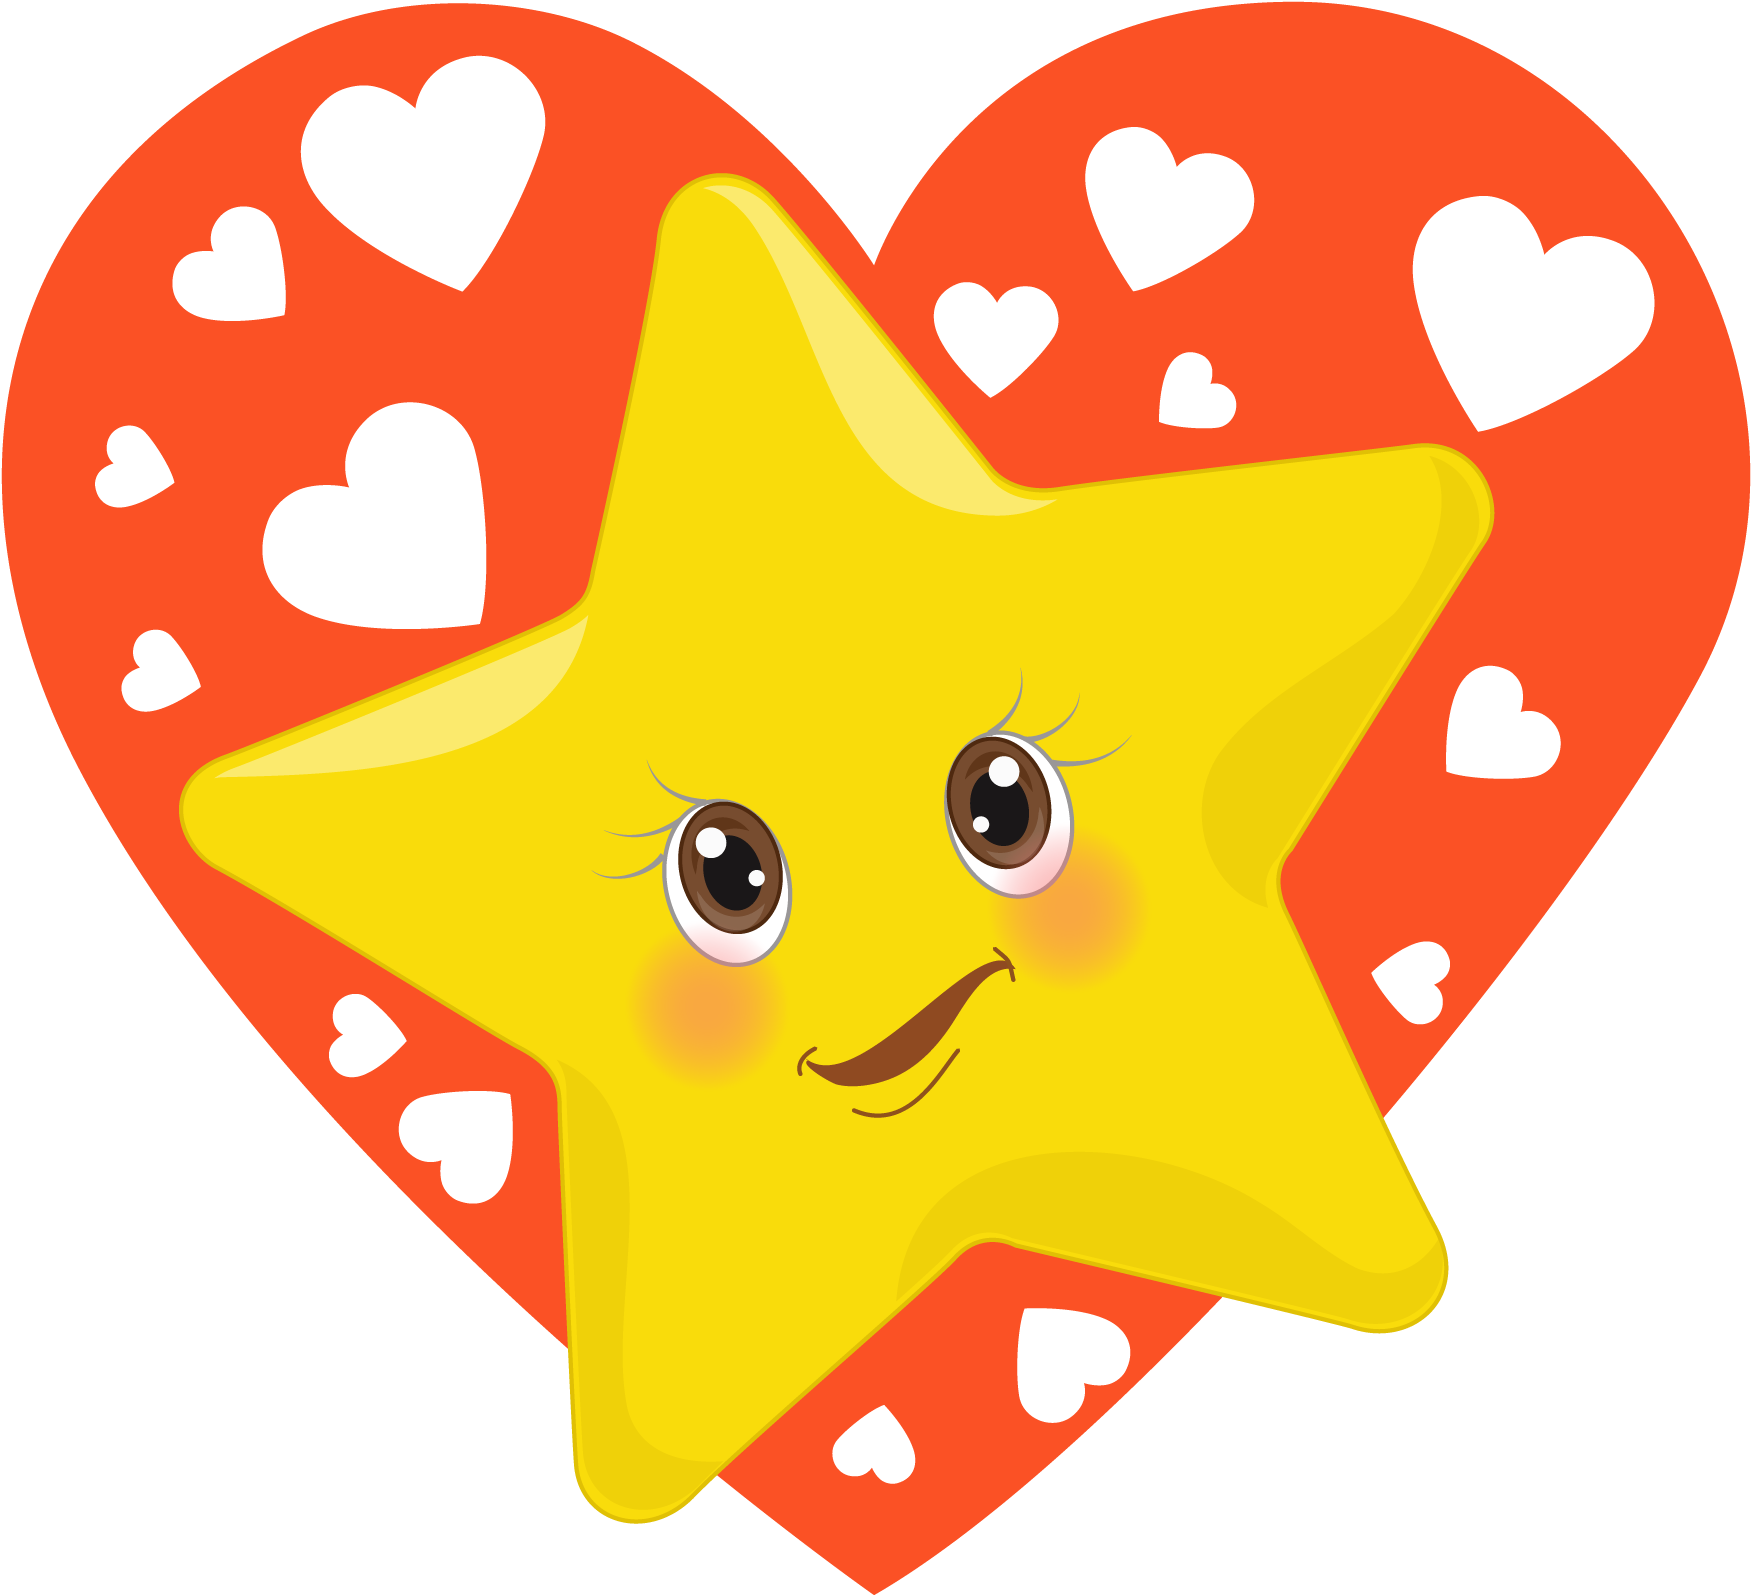 Home - Star Emoji (1800x1800)